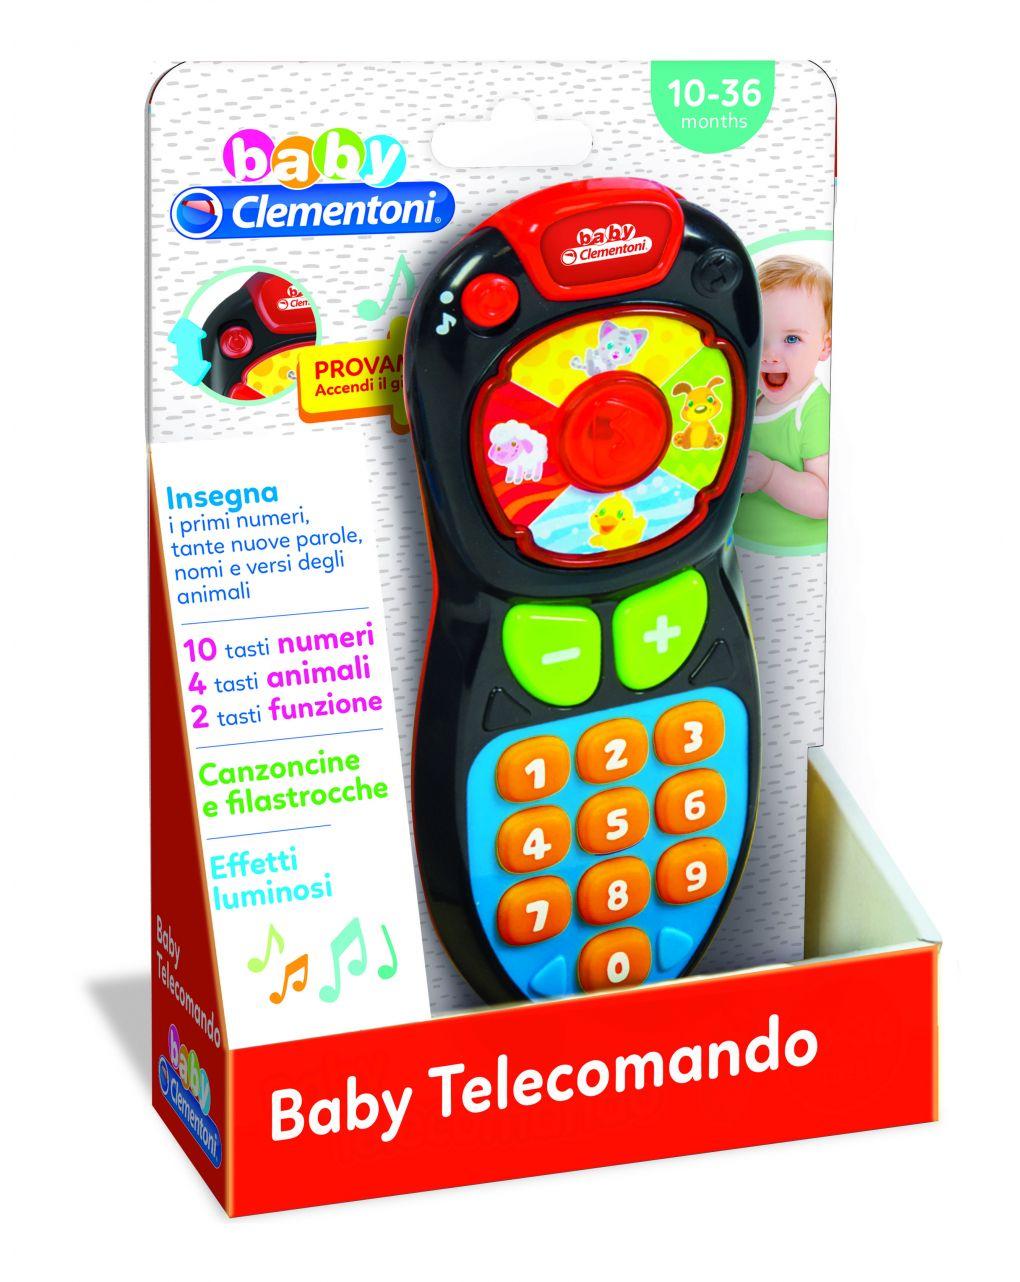 Baby Telecomando Clementoni